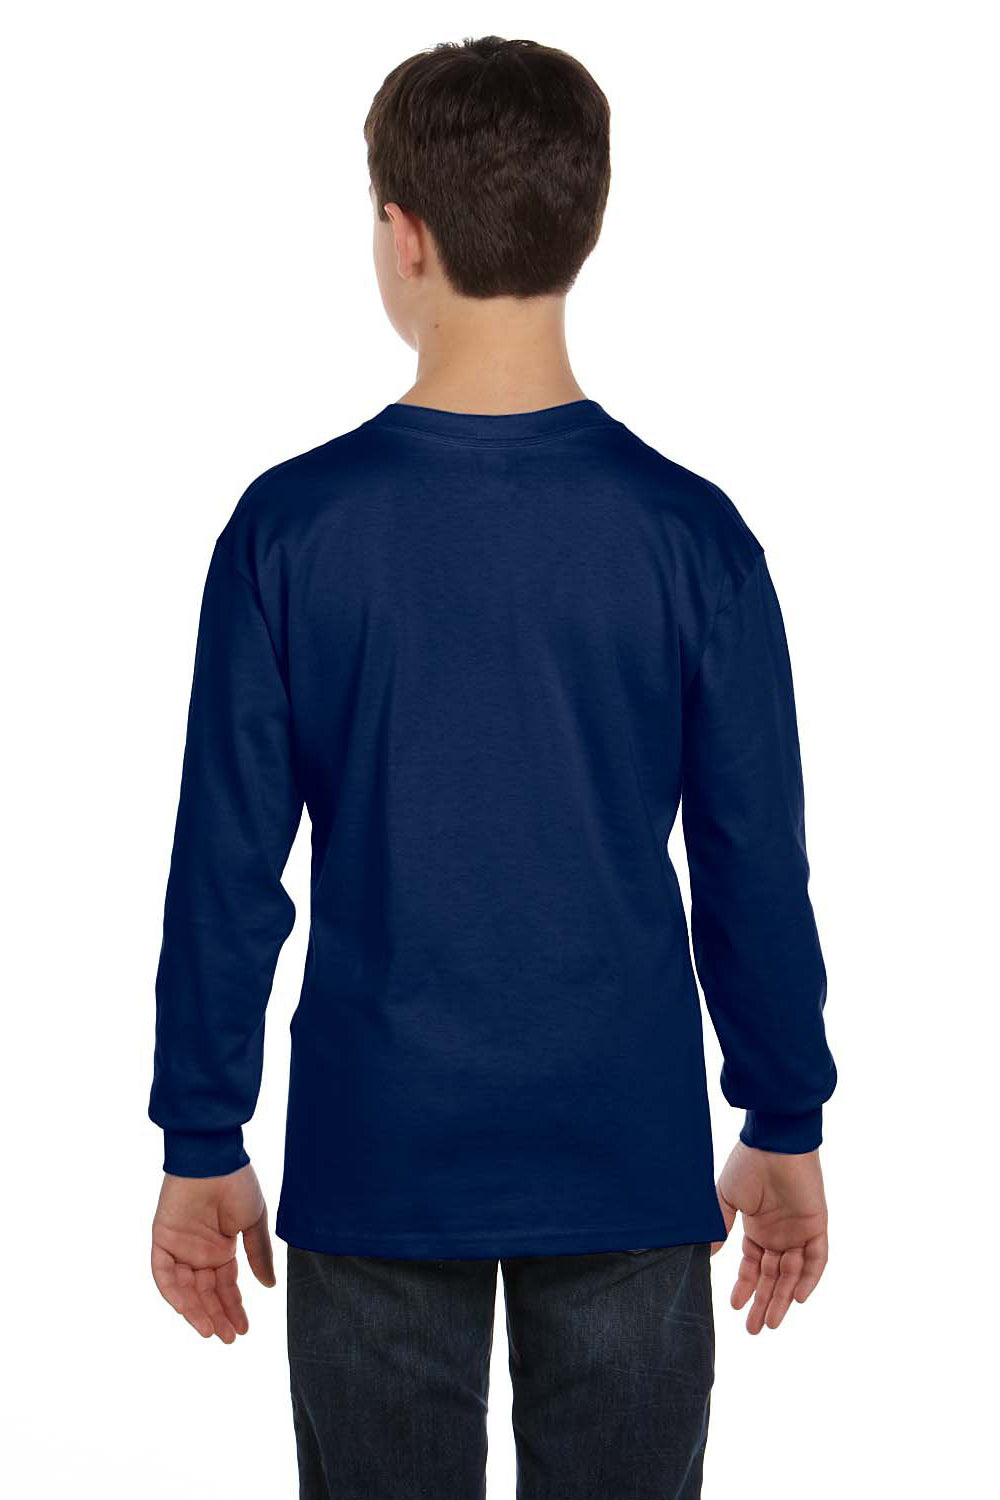 Gildan G540B Youth Long Sleeve Crewneck T-Shirt Navy Blue Back